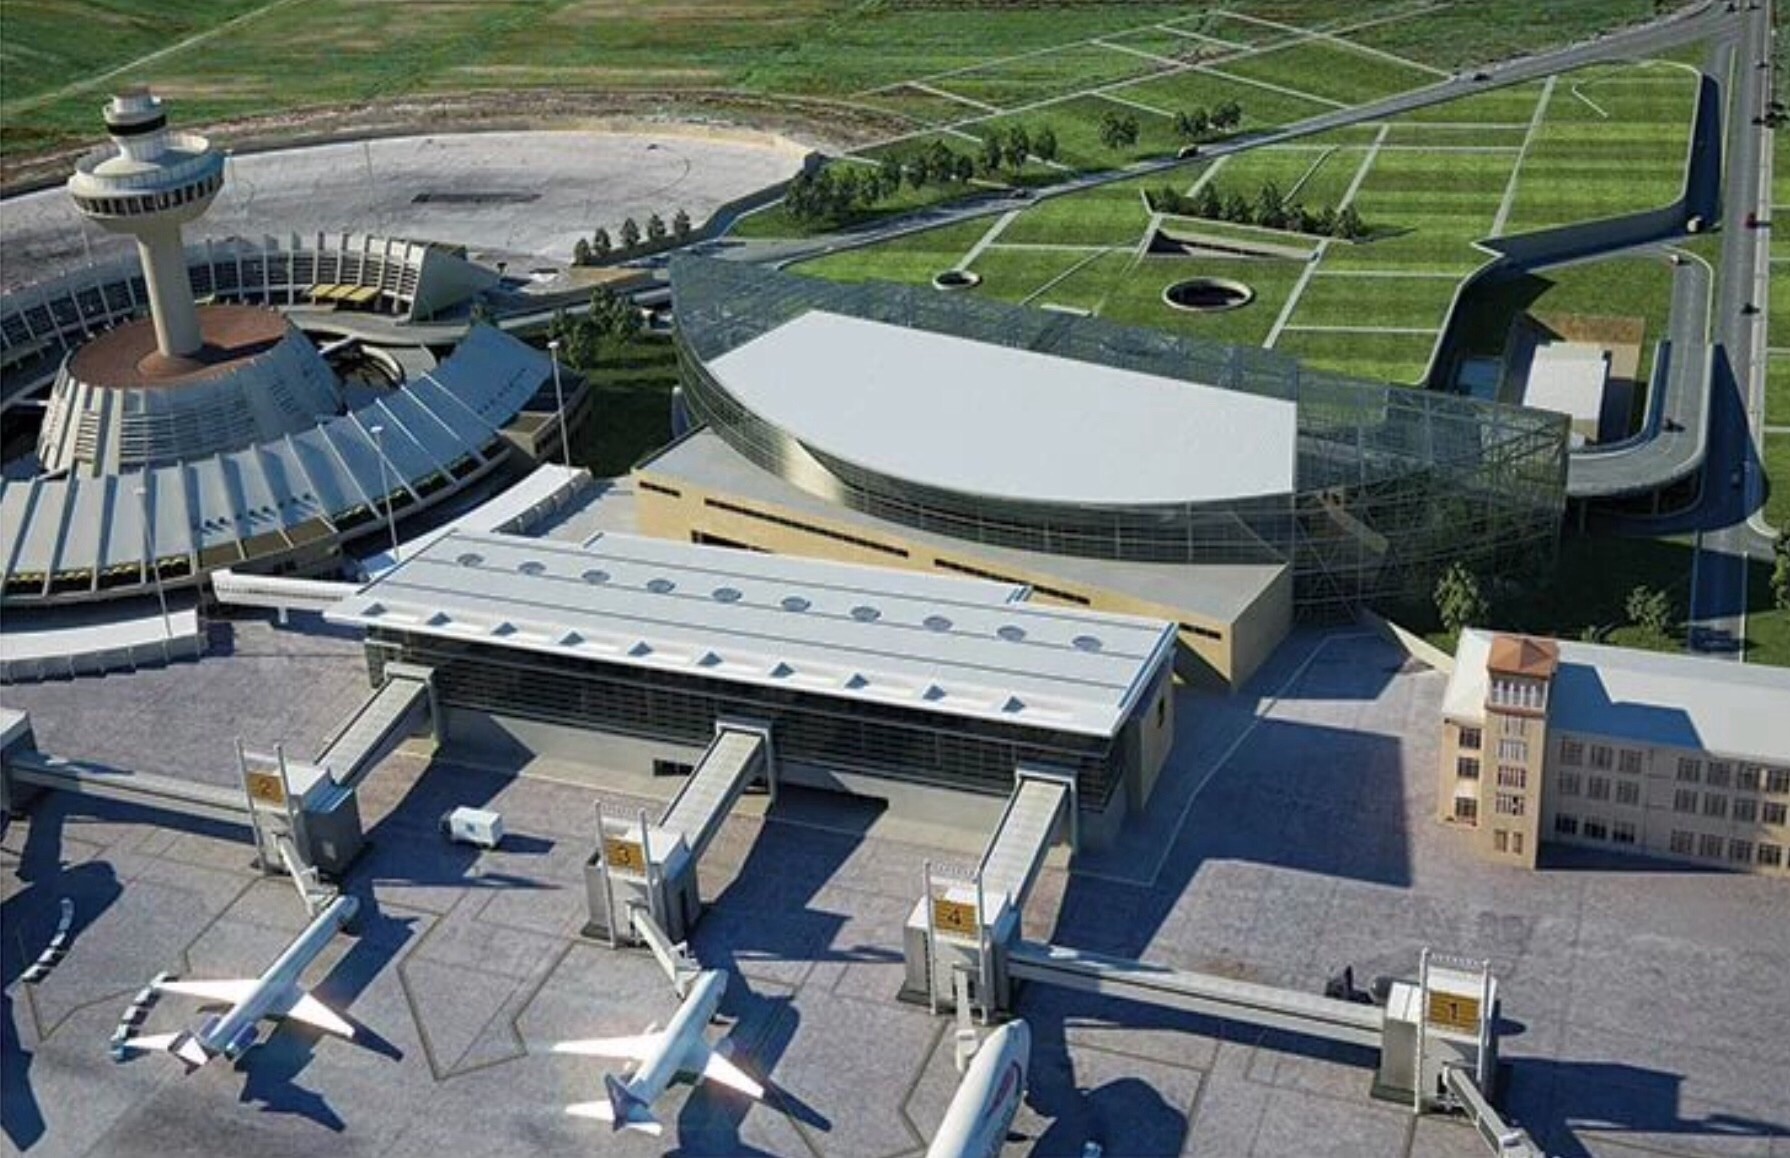 Сайт аэропорта звартноц. Международный аэропорт Ереван Звартноц, Армения. Терминал аэропорт Звартноц. Аэропорт Звартноц новый. Аэропорт Ереван новый.